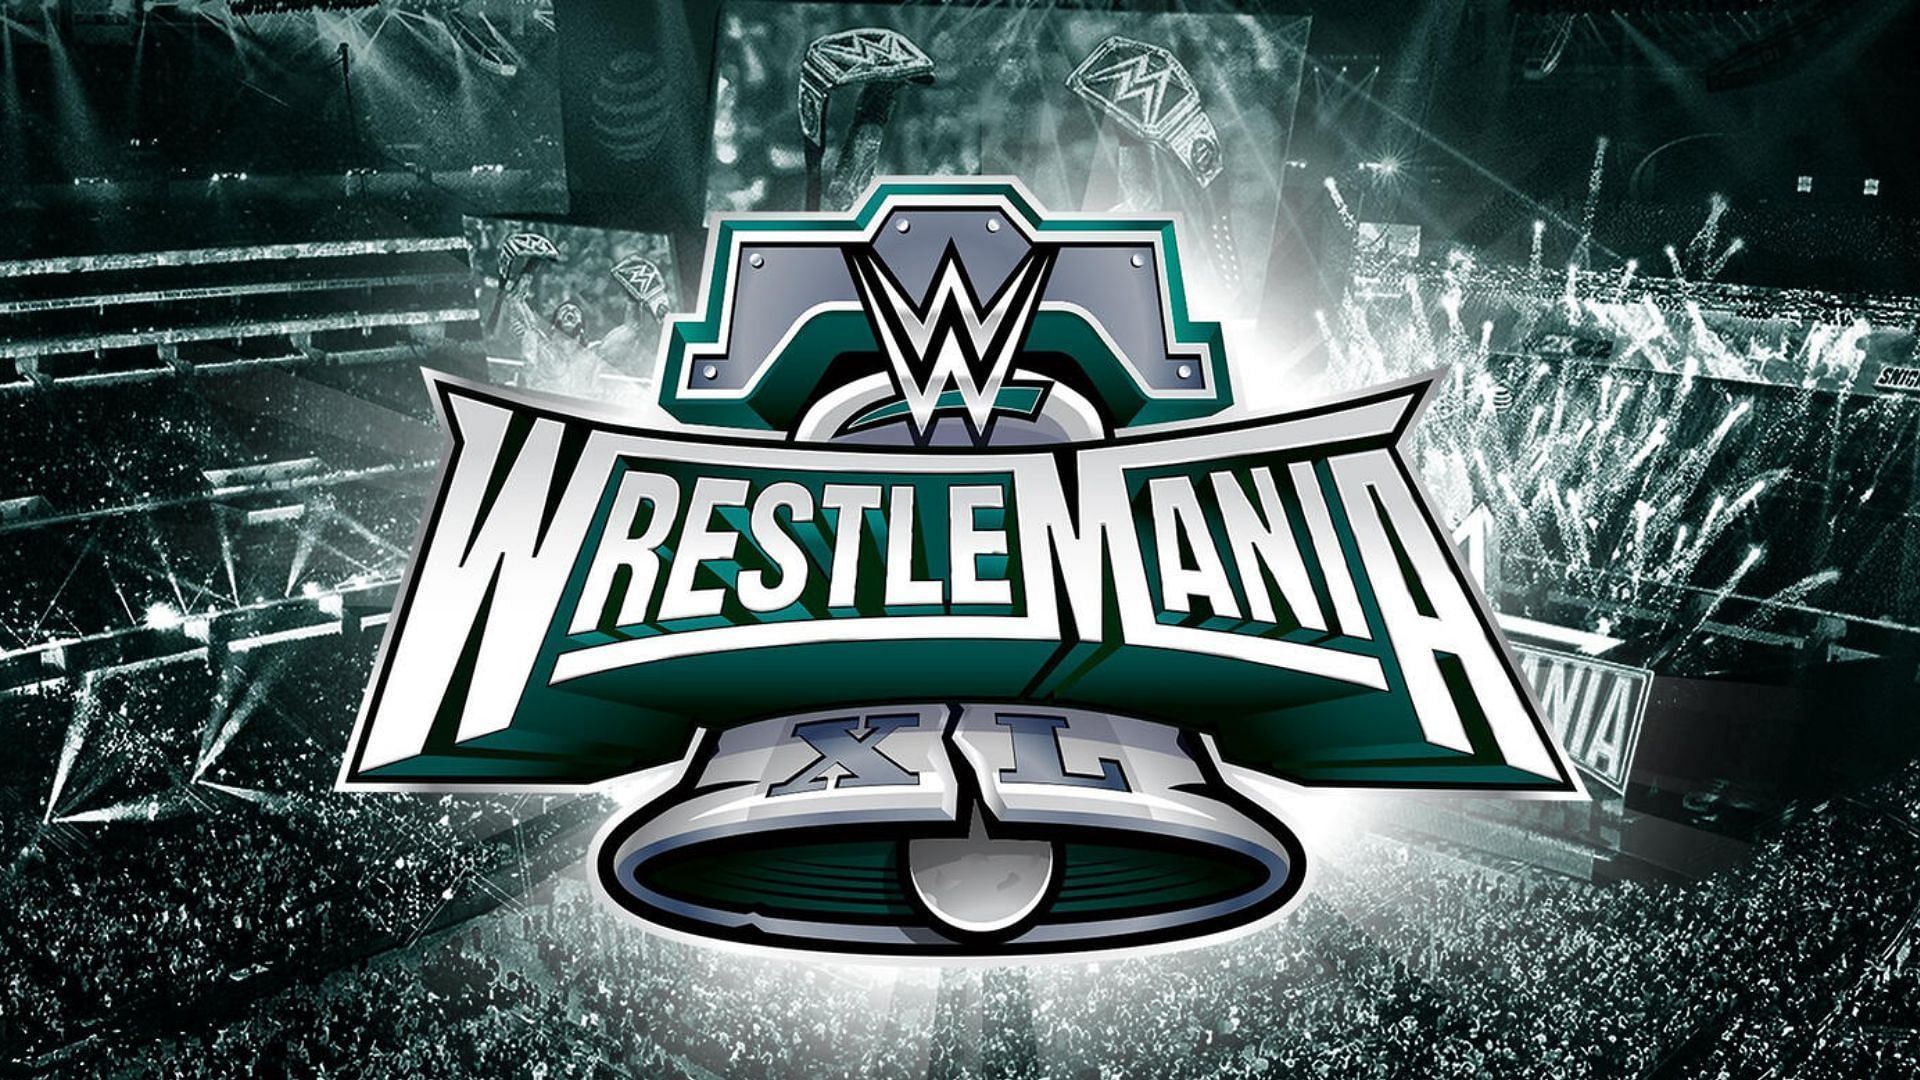 WrestleMania will take place in Philadelphia next weekend.